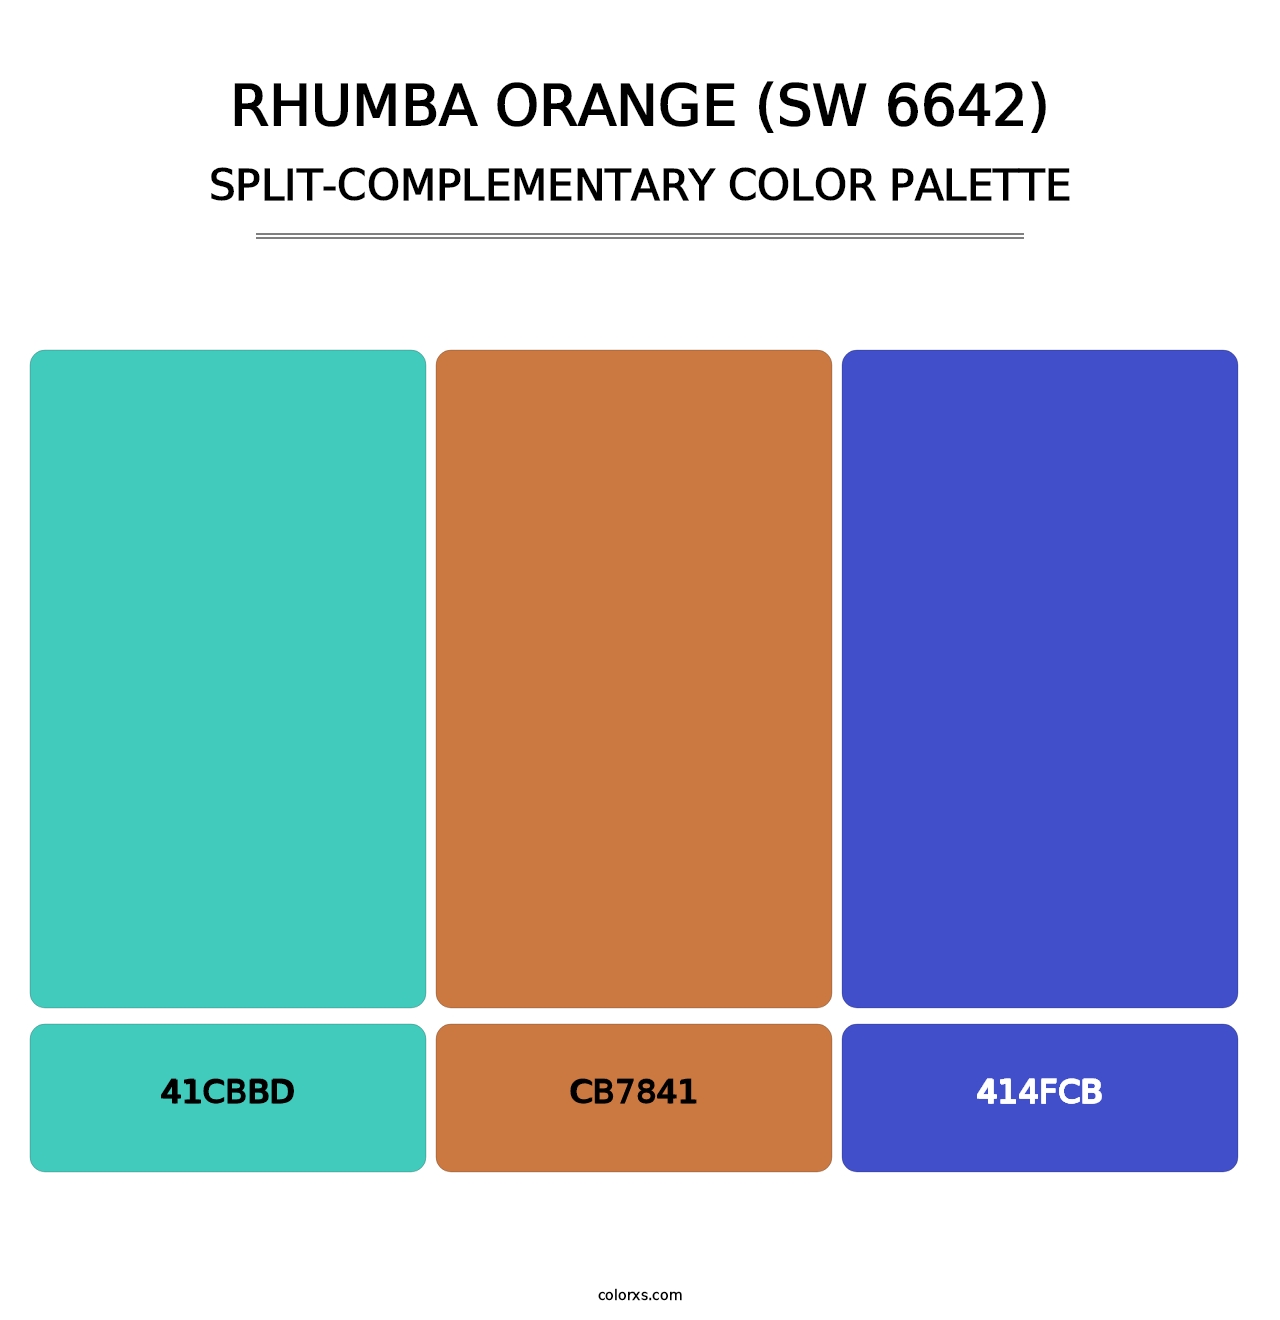 Rhumba Orange (SW 6642) - Split-Complementary Color Palette